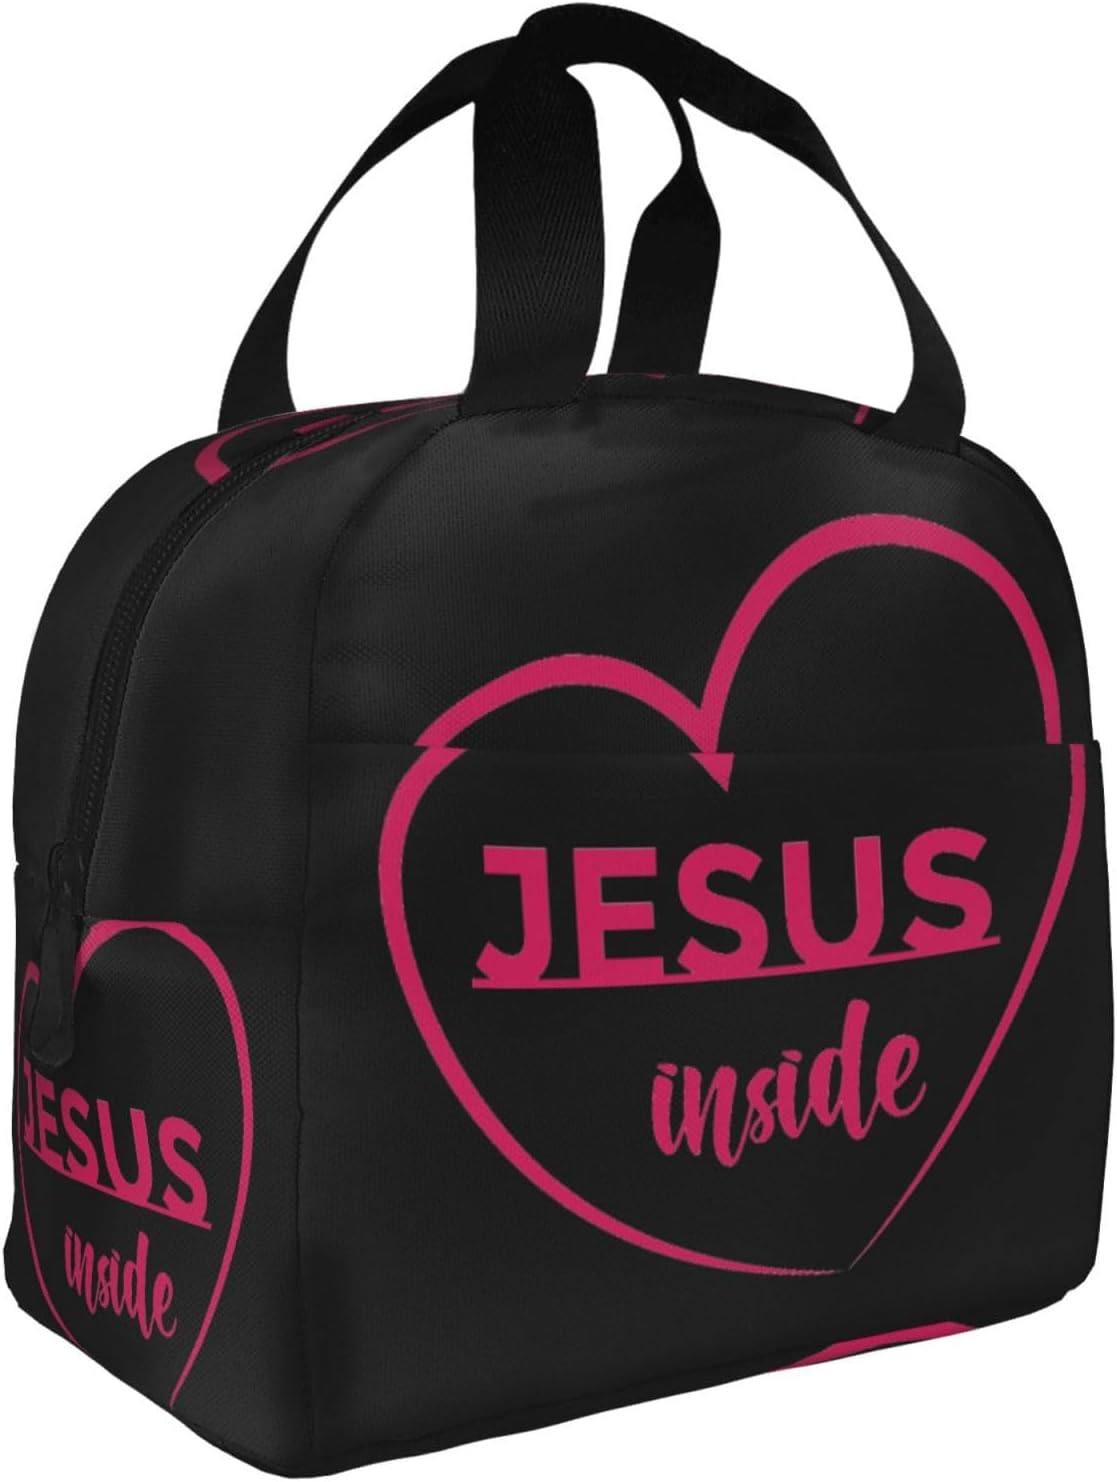 Jesus Inside Christian Lunch Bag claimedbygoddesigns